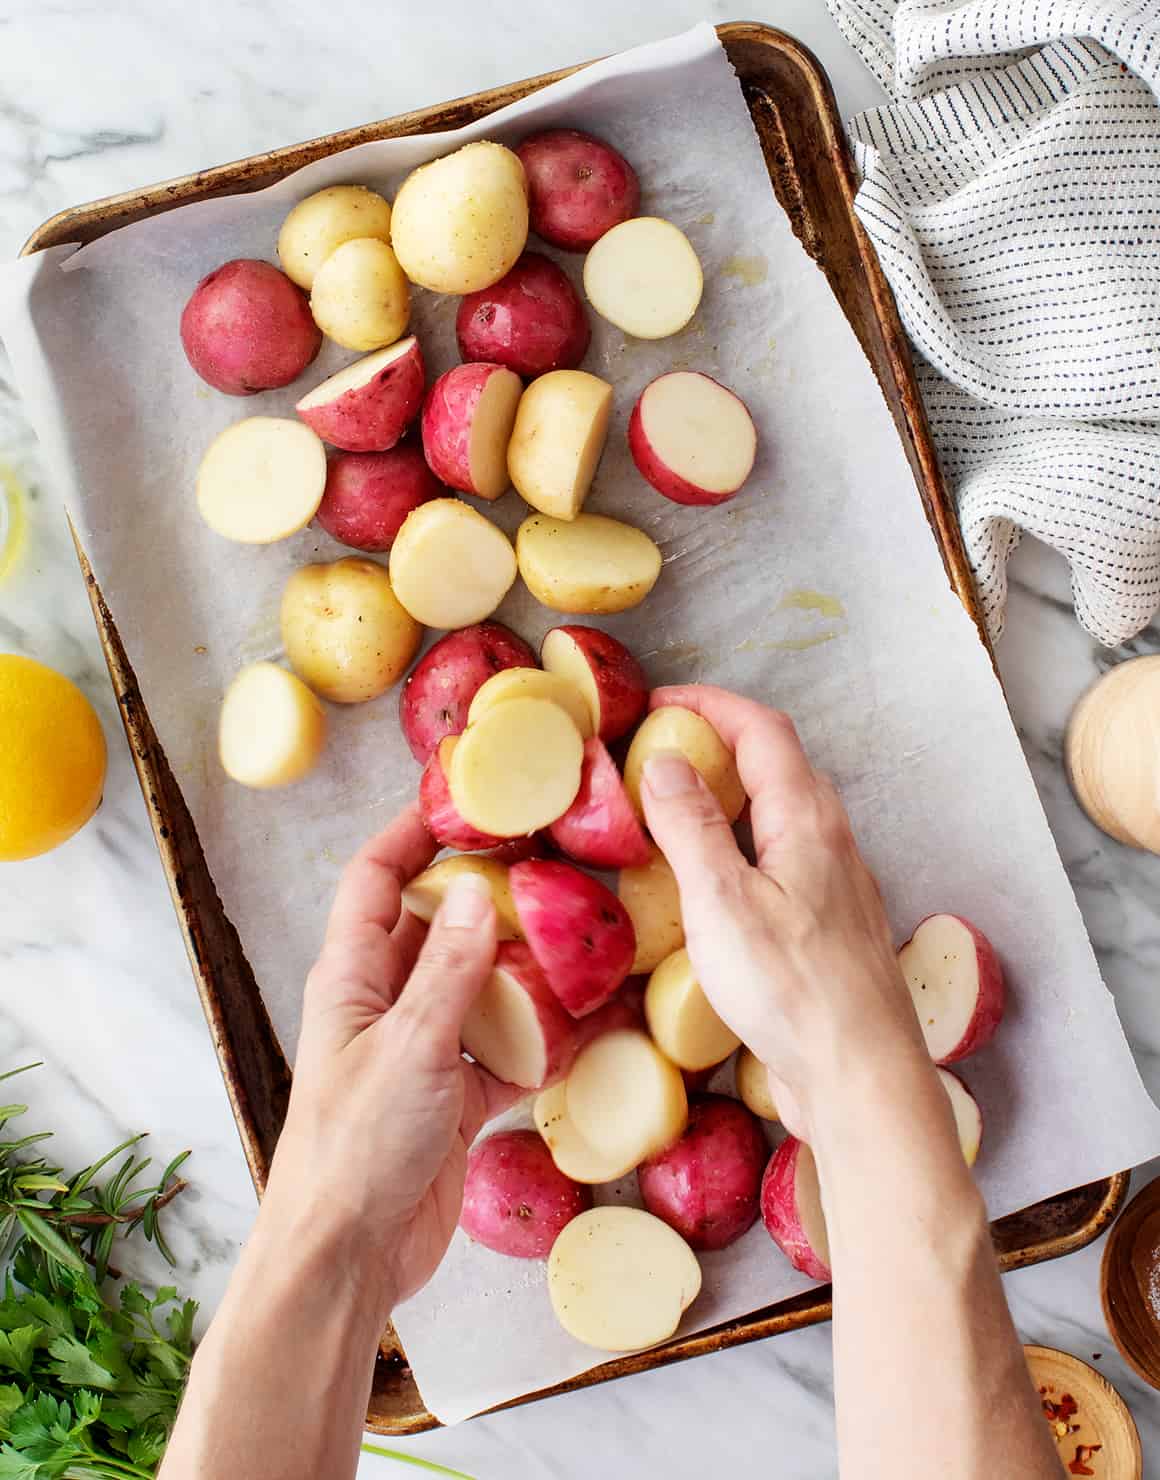 Roasted potatoes recipe